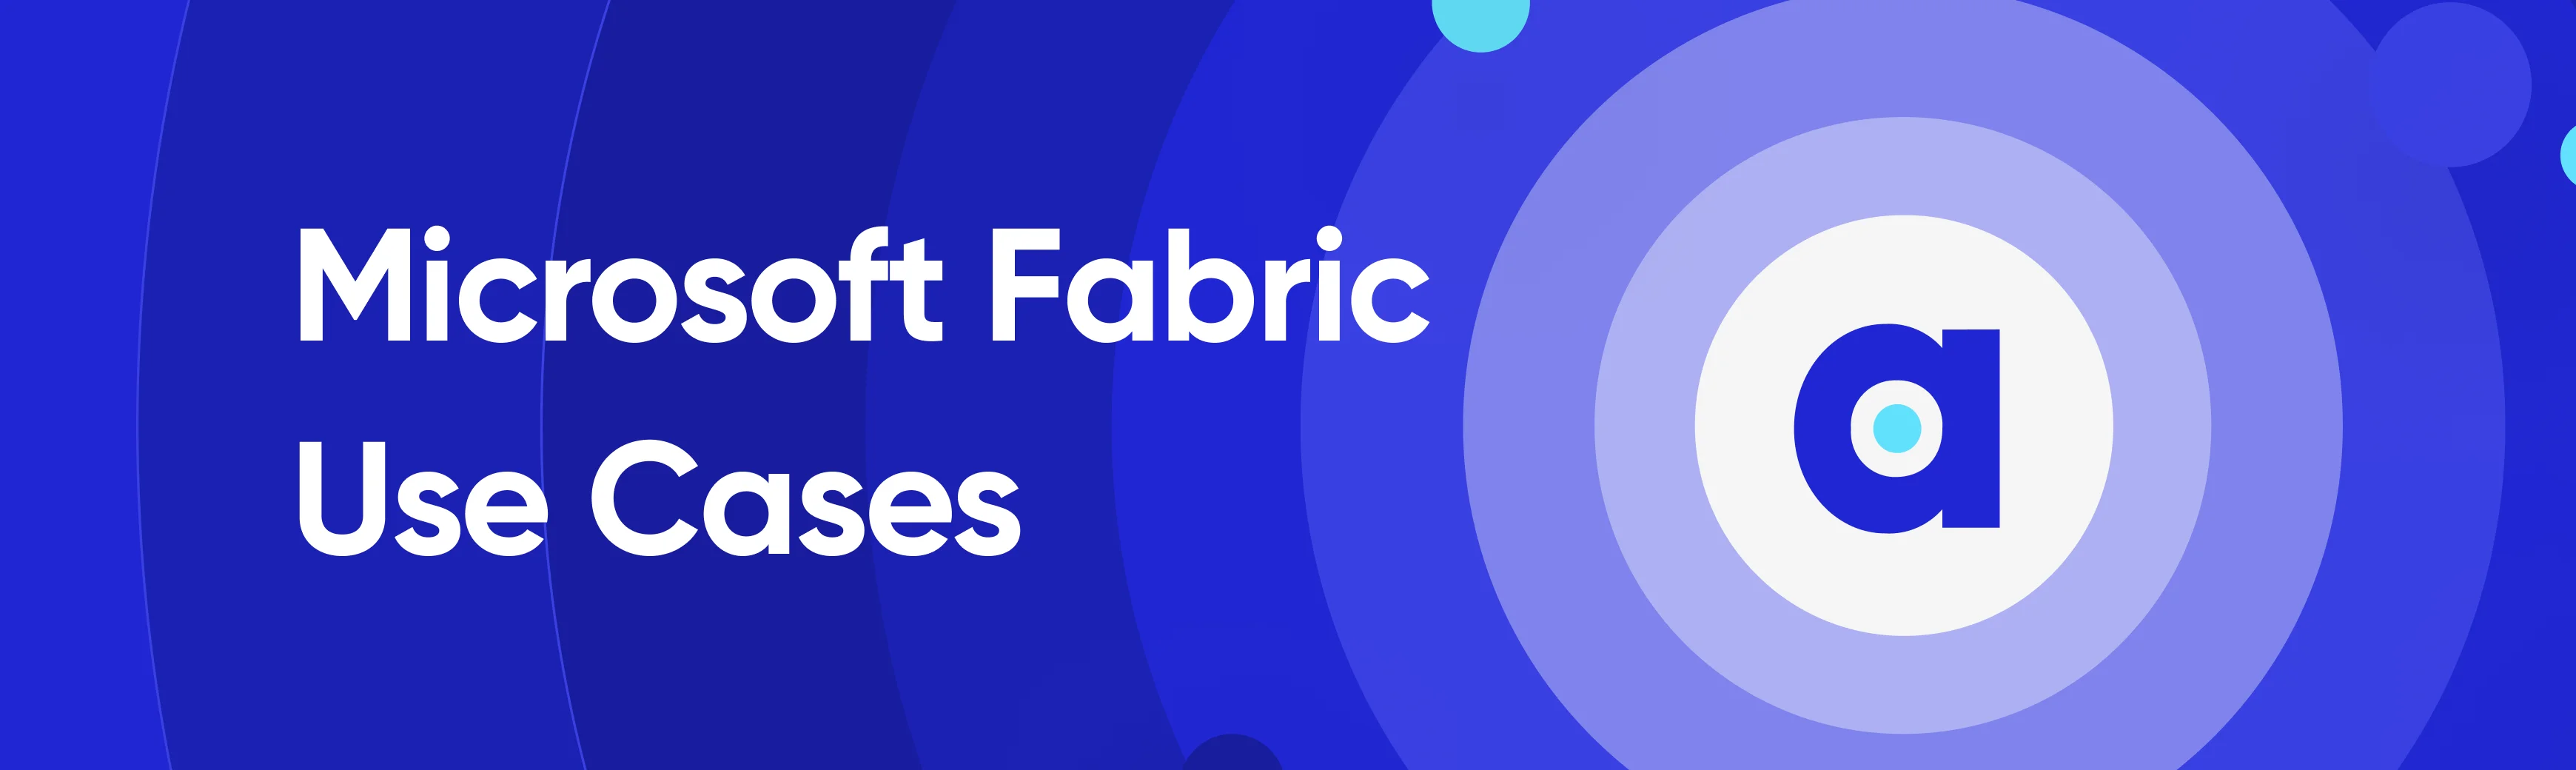 Microsoft Fabric Use Cases